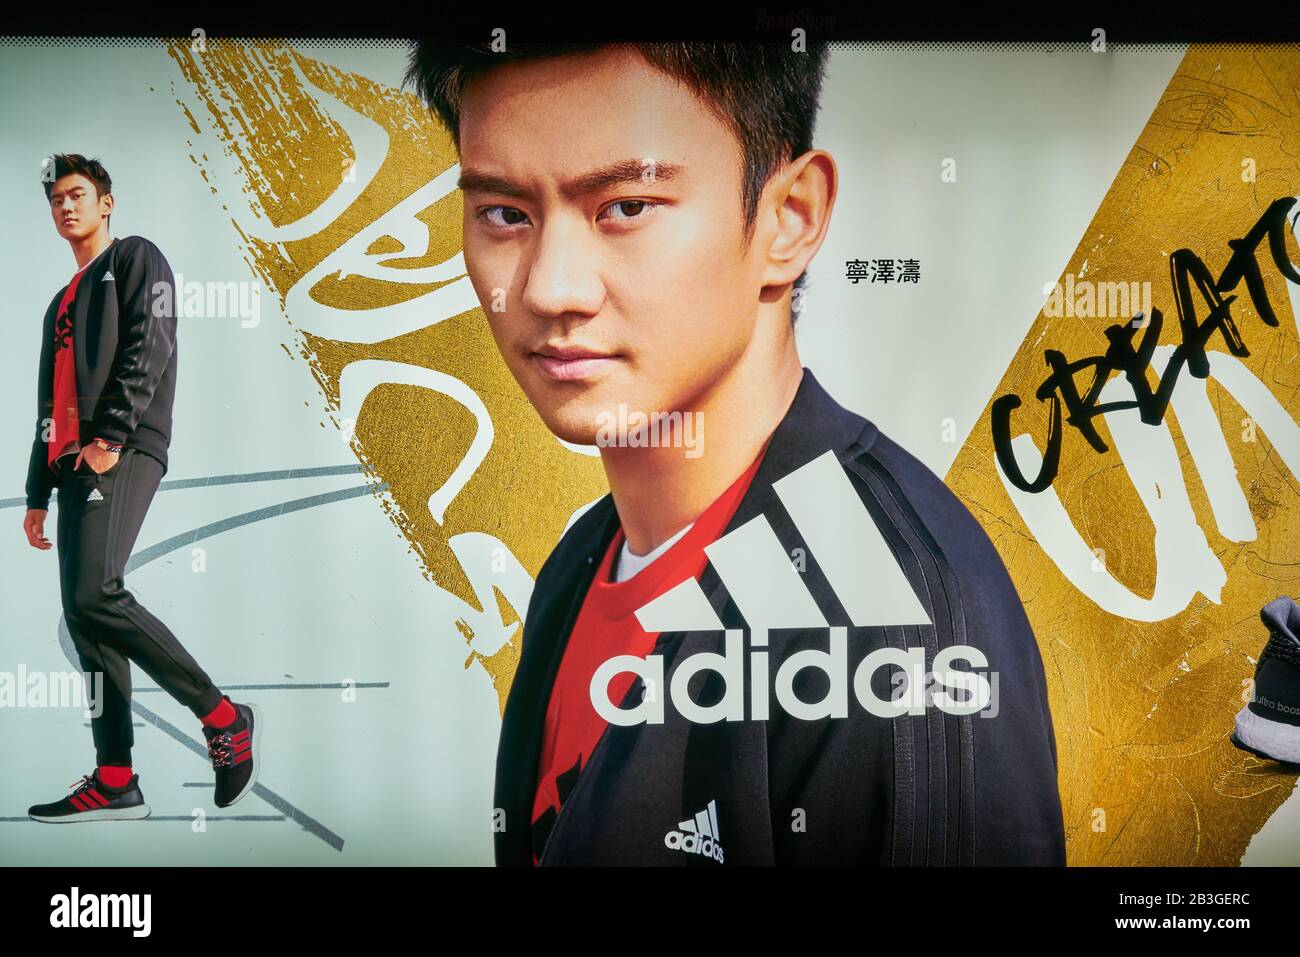 Acuerdo Consejos reunirse Hong KONG, CHINA - 23 DE ENERO de 2019: Primer plano del cartel publicitario  de Adidas visto en Hong Kong Fotografía de stock - Alamy